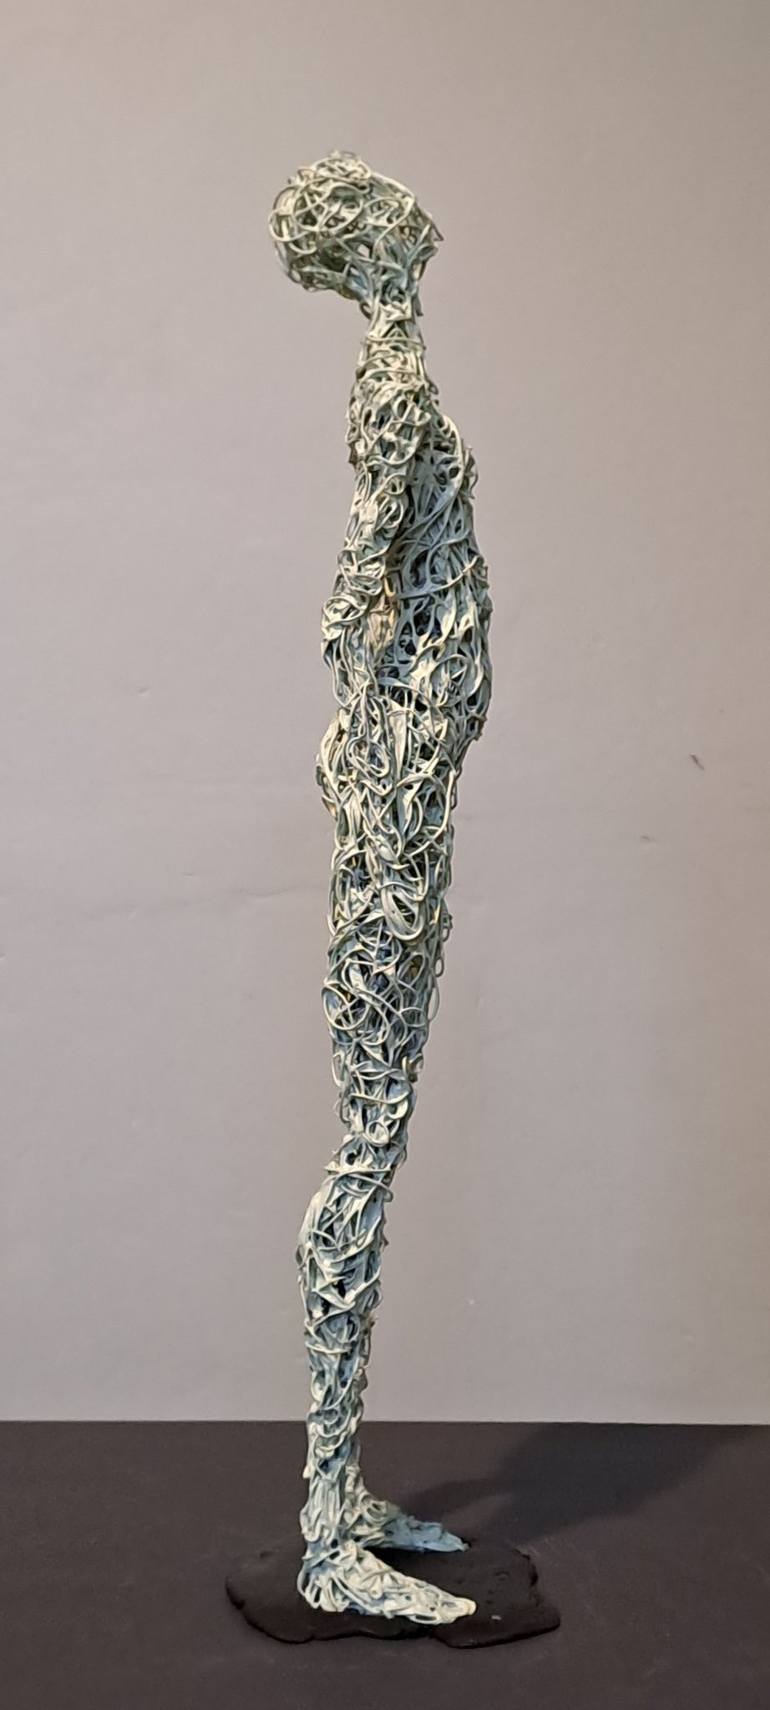 Original Contemporary Body Sculpture by Katarina Crawford